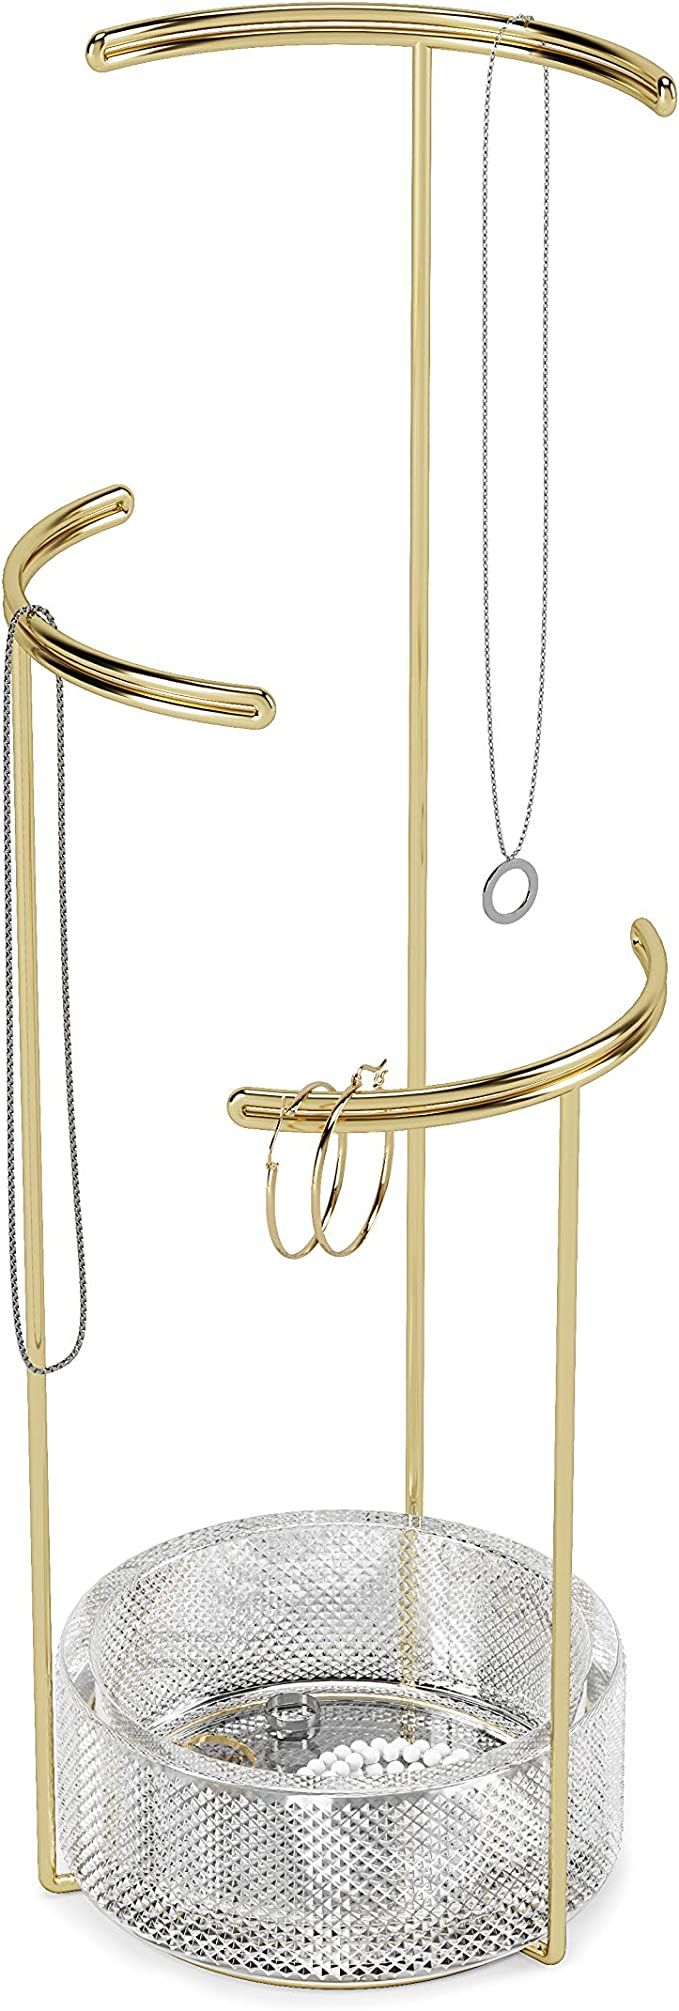 Umbra Tesora 3-Tier Jewelry Stand, Earring Holder, Accessory Organizer and Display, Glass/Brass | Amazon (US)